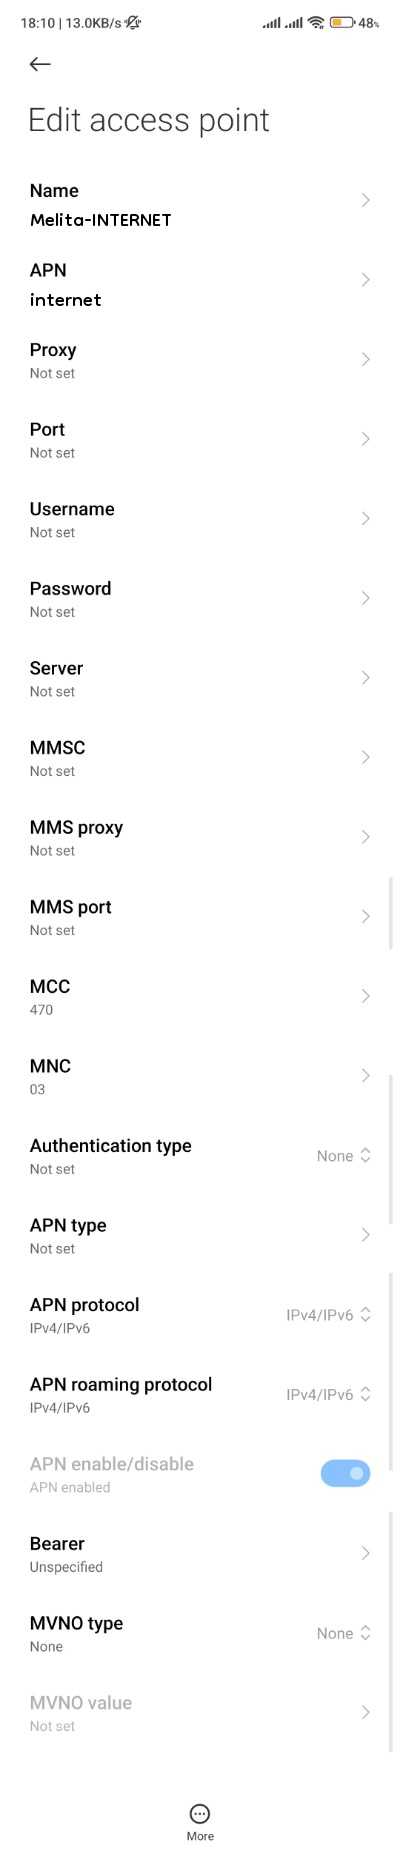 Melita APN Setiings for Android iPhone 3G 4G Internet